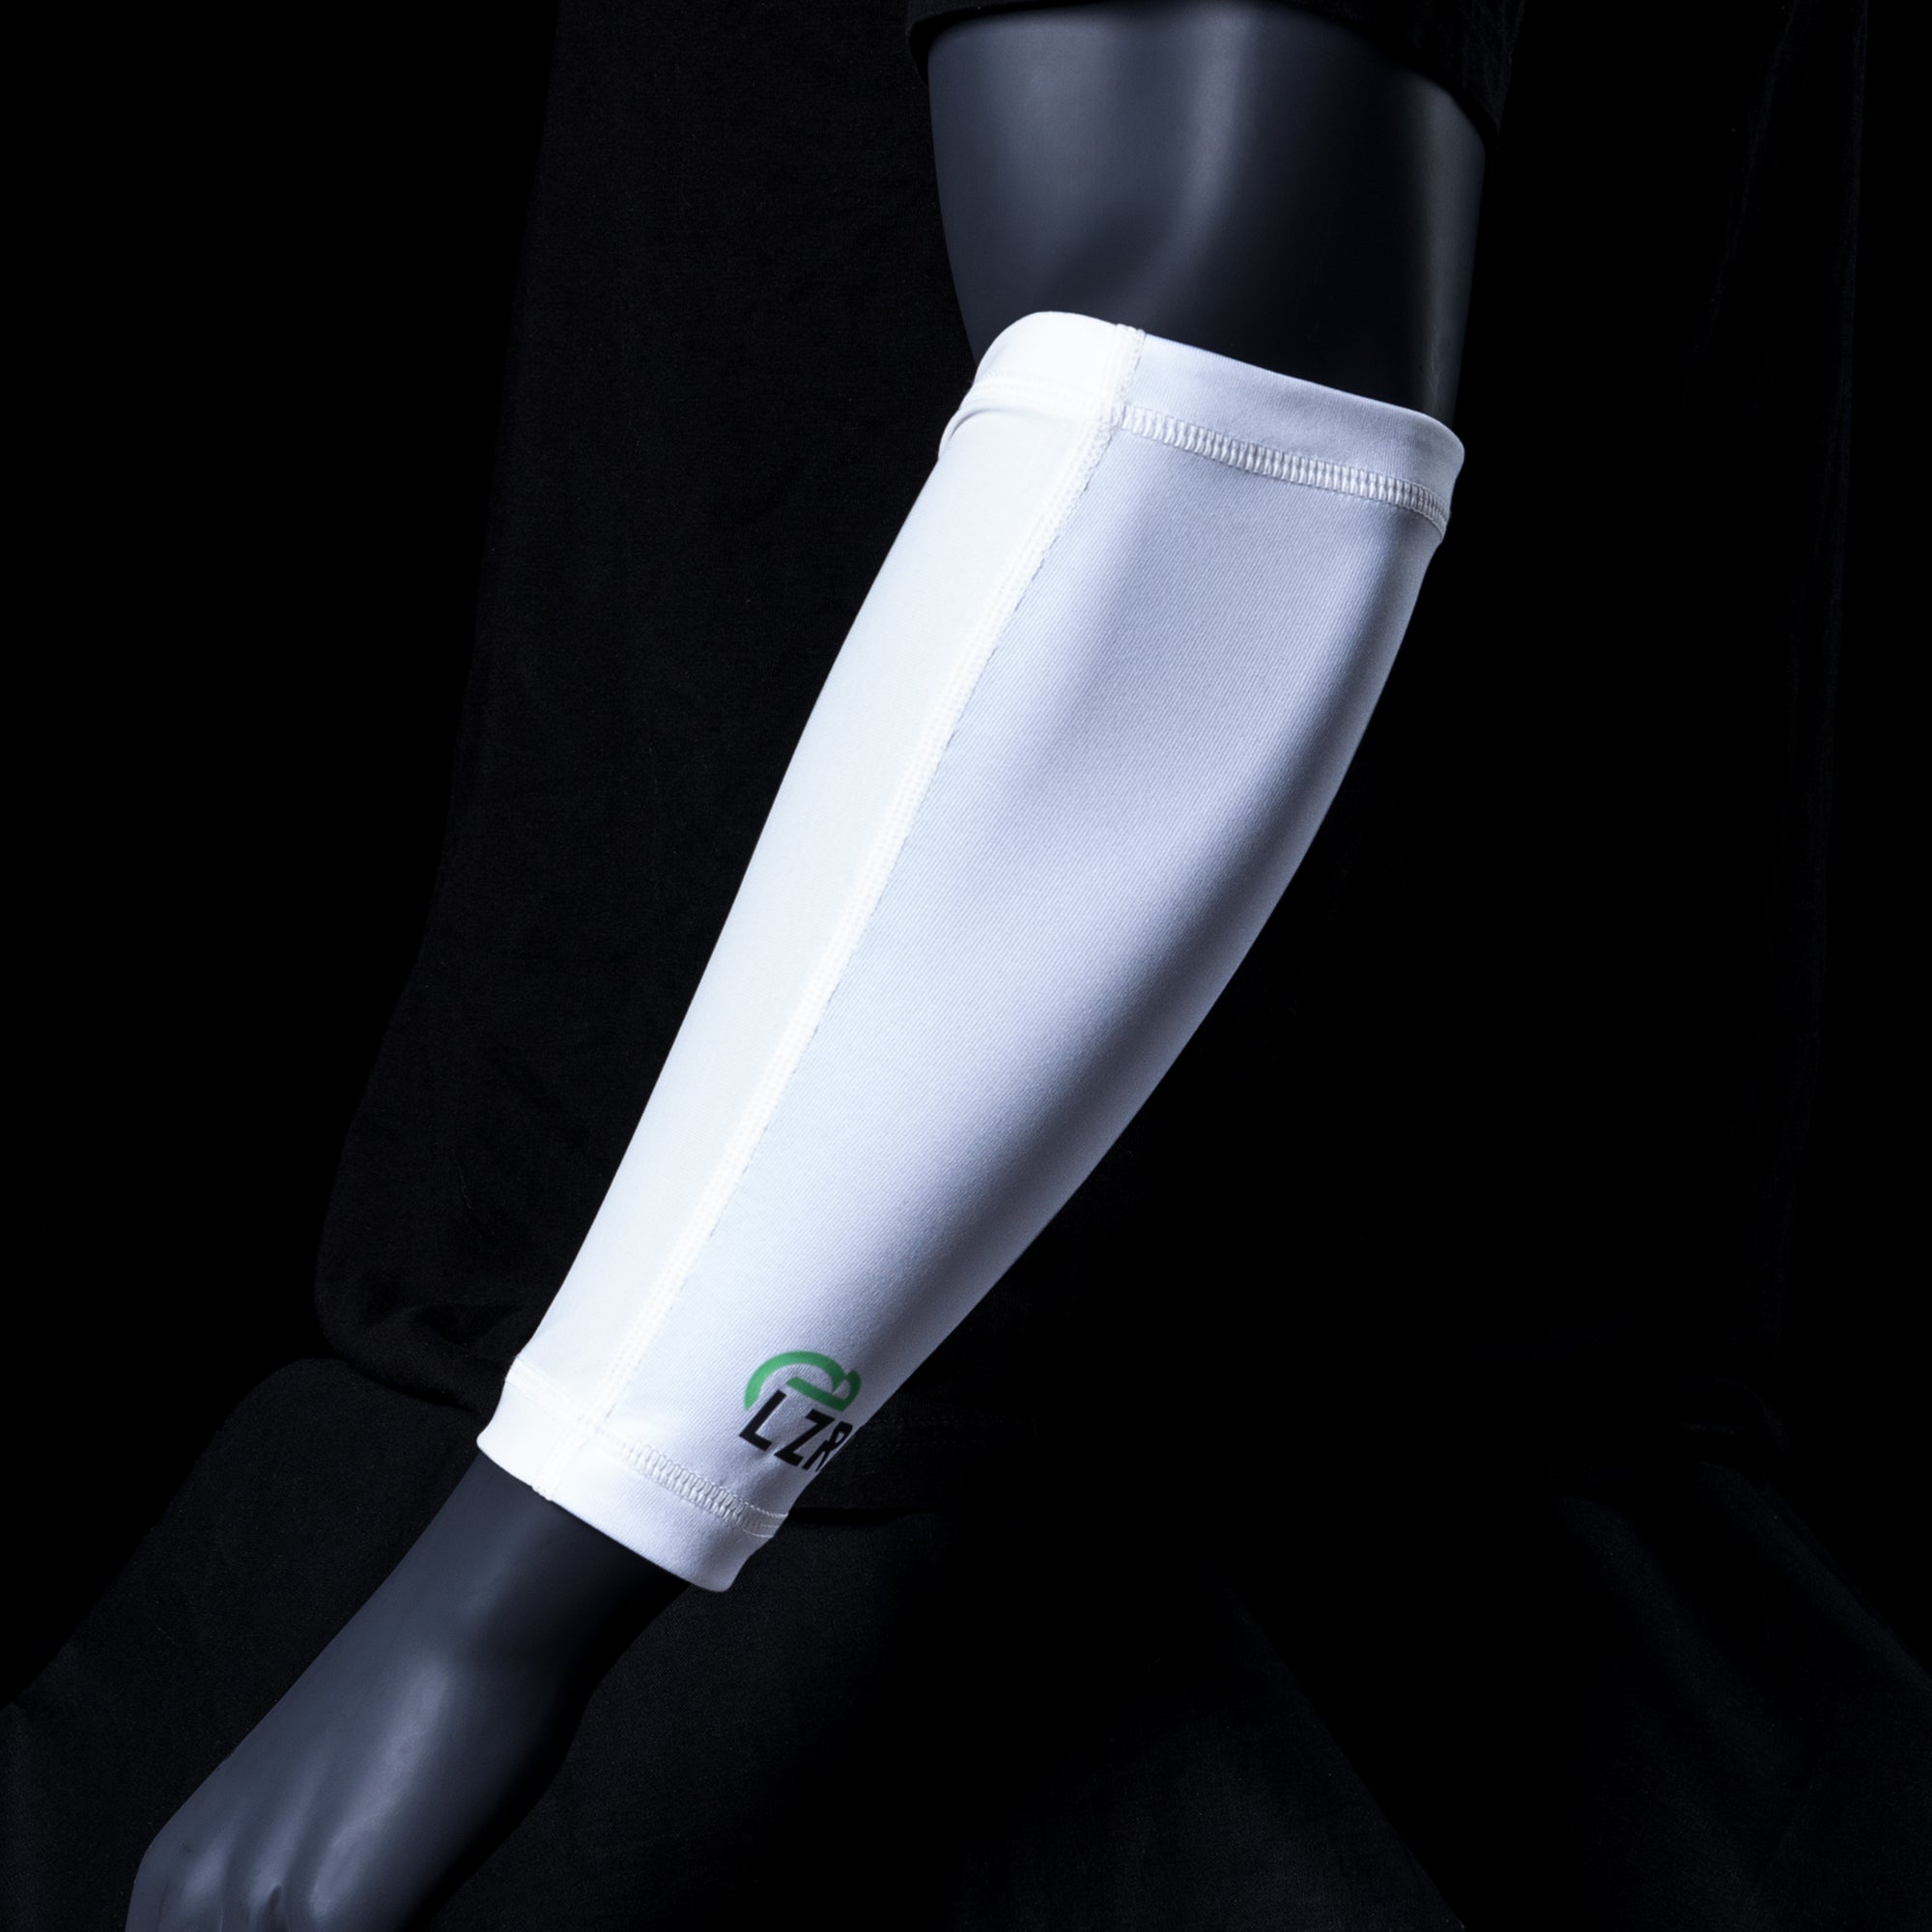 LZRD Tech Football Sleeve - Max Grip Compression Arm Sleeve